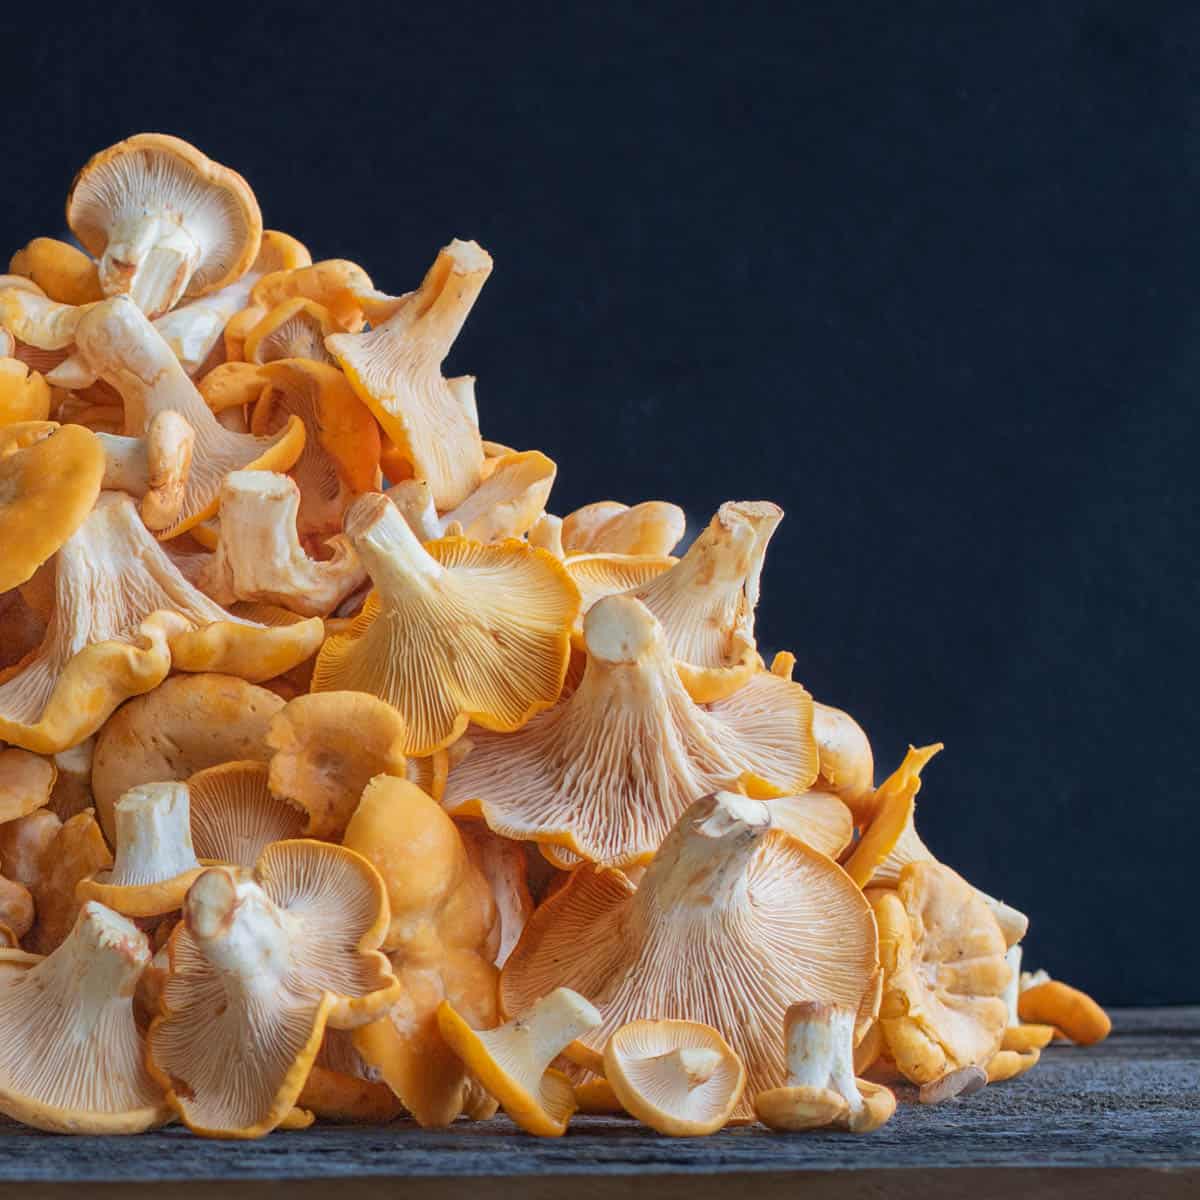 A pile of chanterelle mushrooms